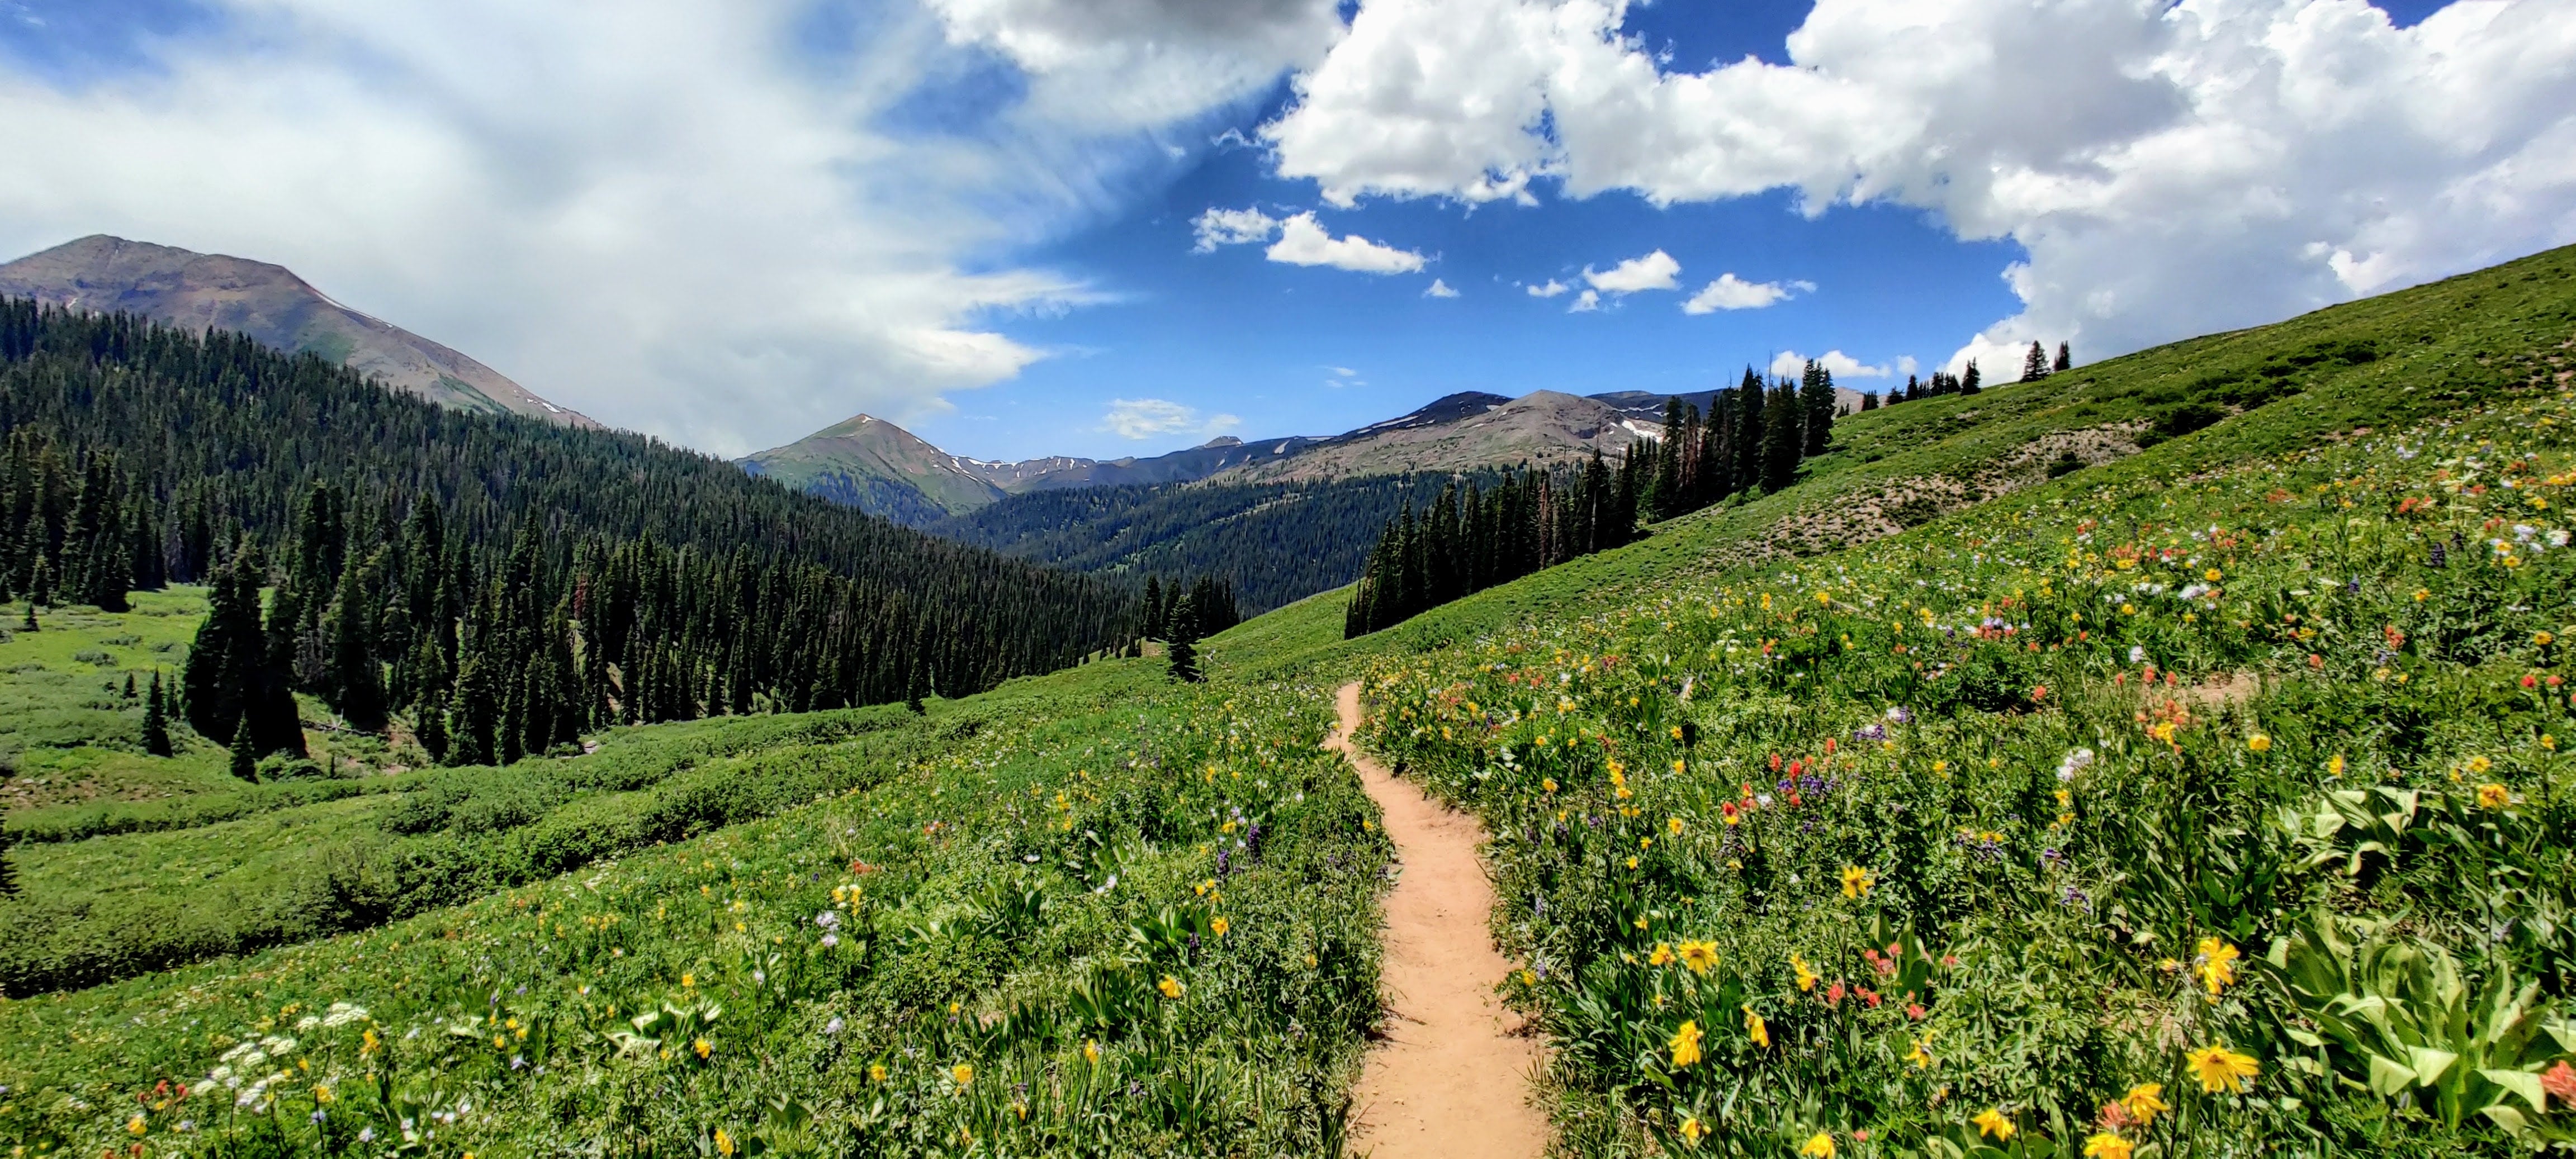 Best Mountain Biking Tips For Colorado